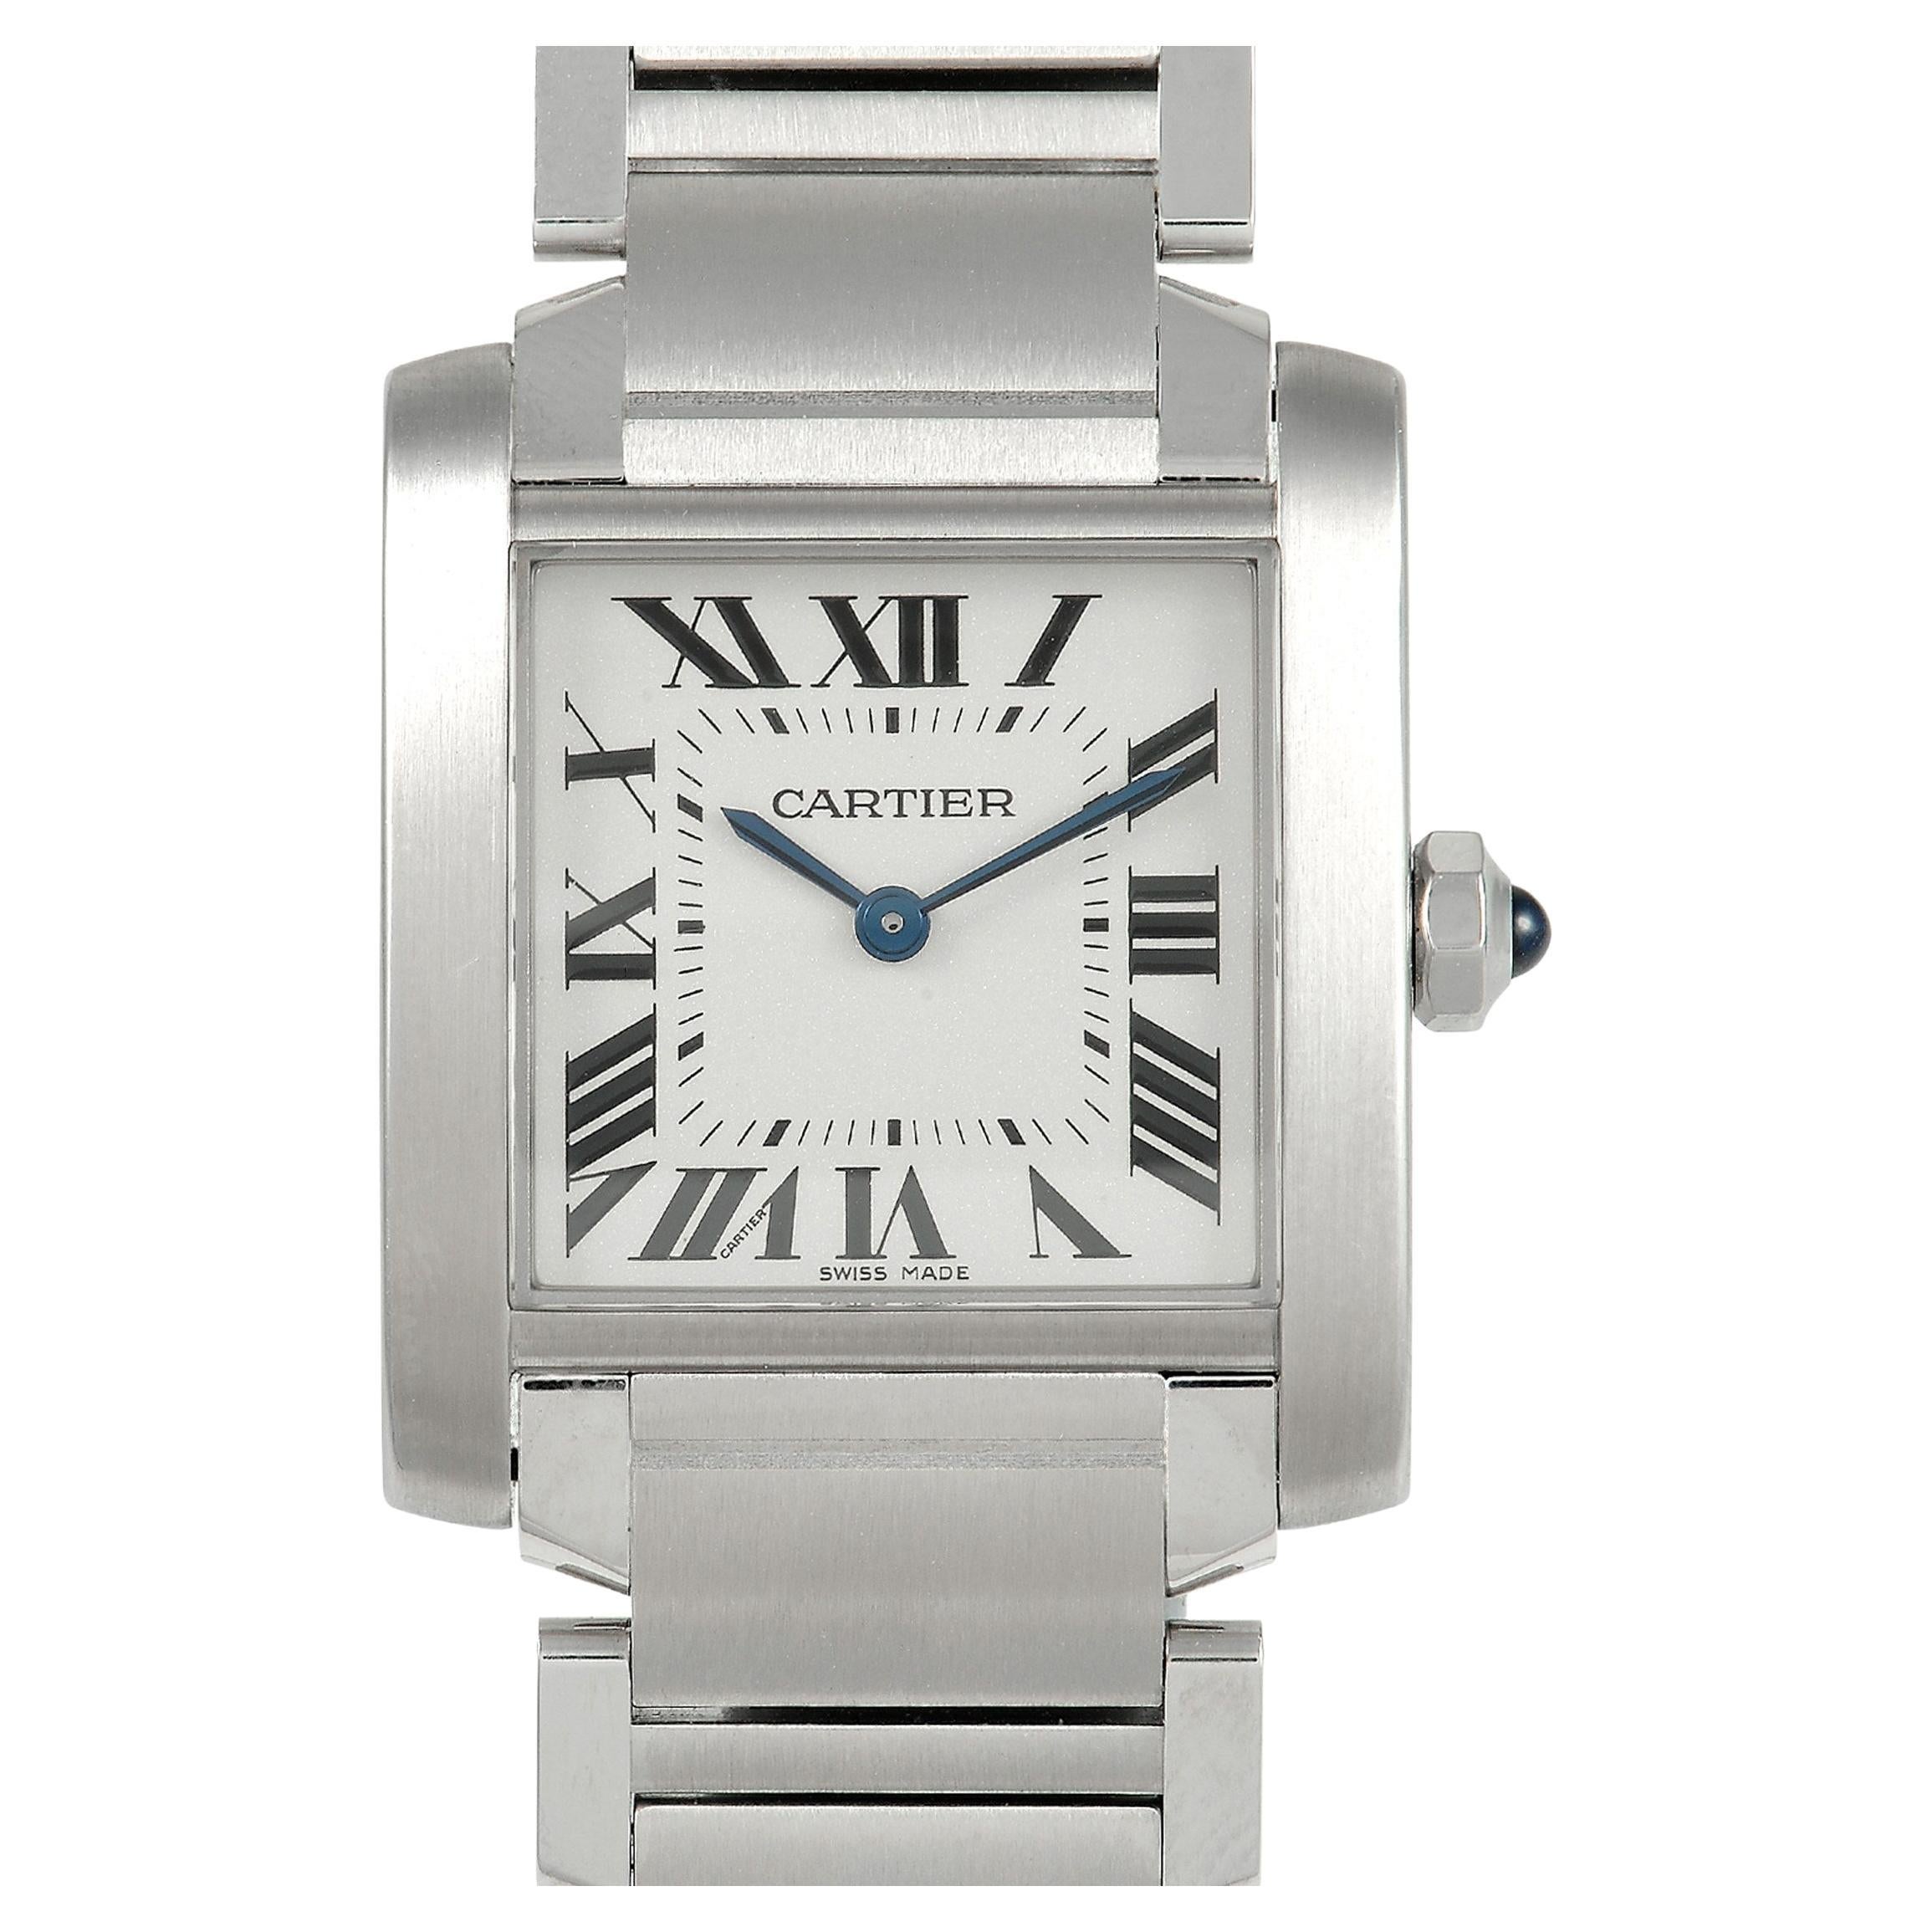 Cartier Tank Francaise Stainless Steel Quartz Watch VSTA 0005